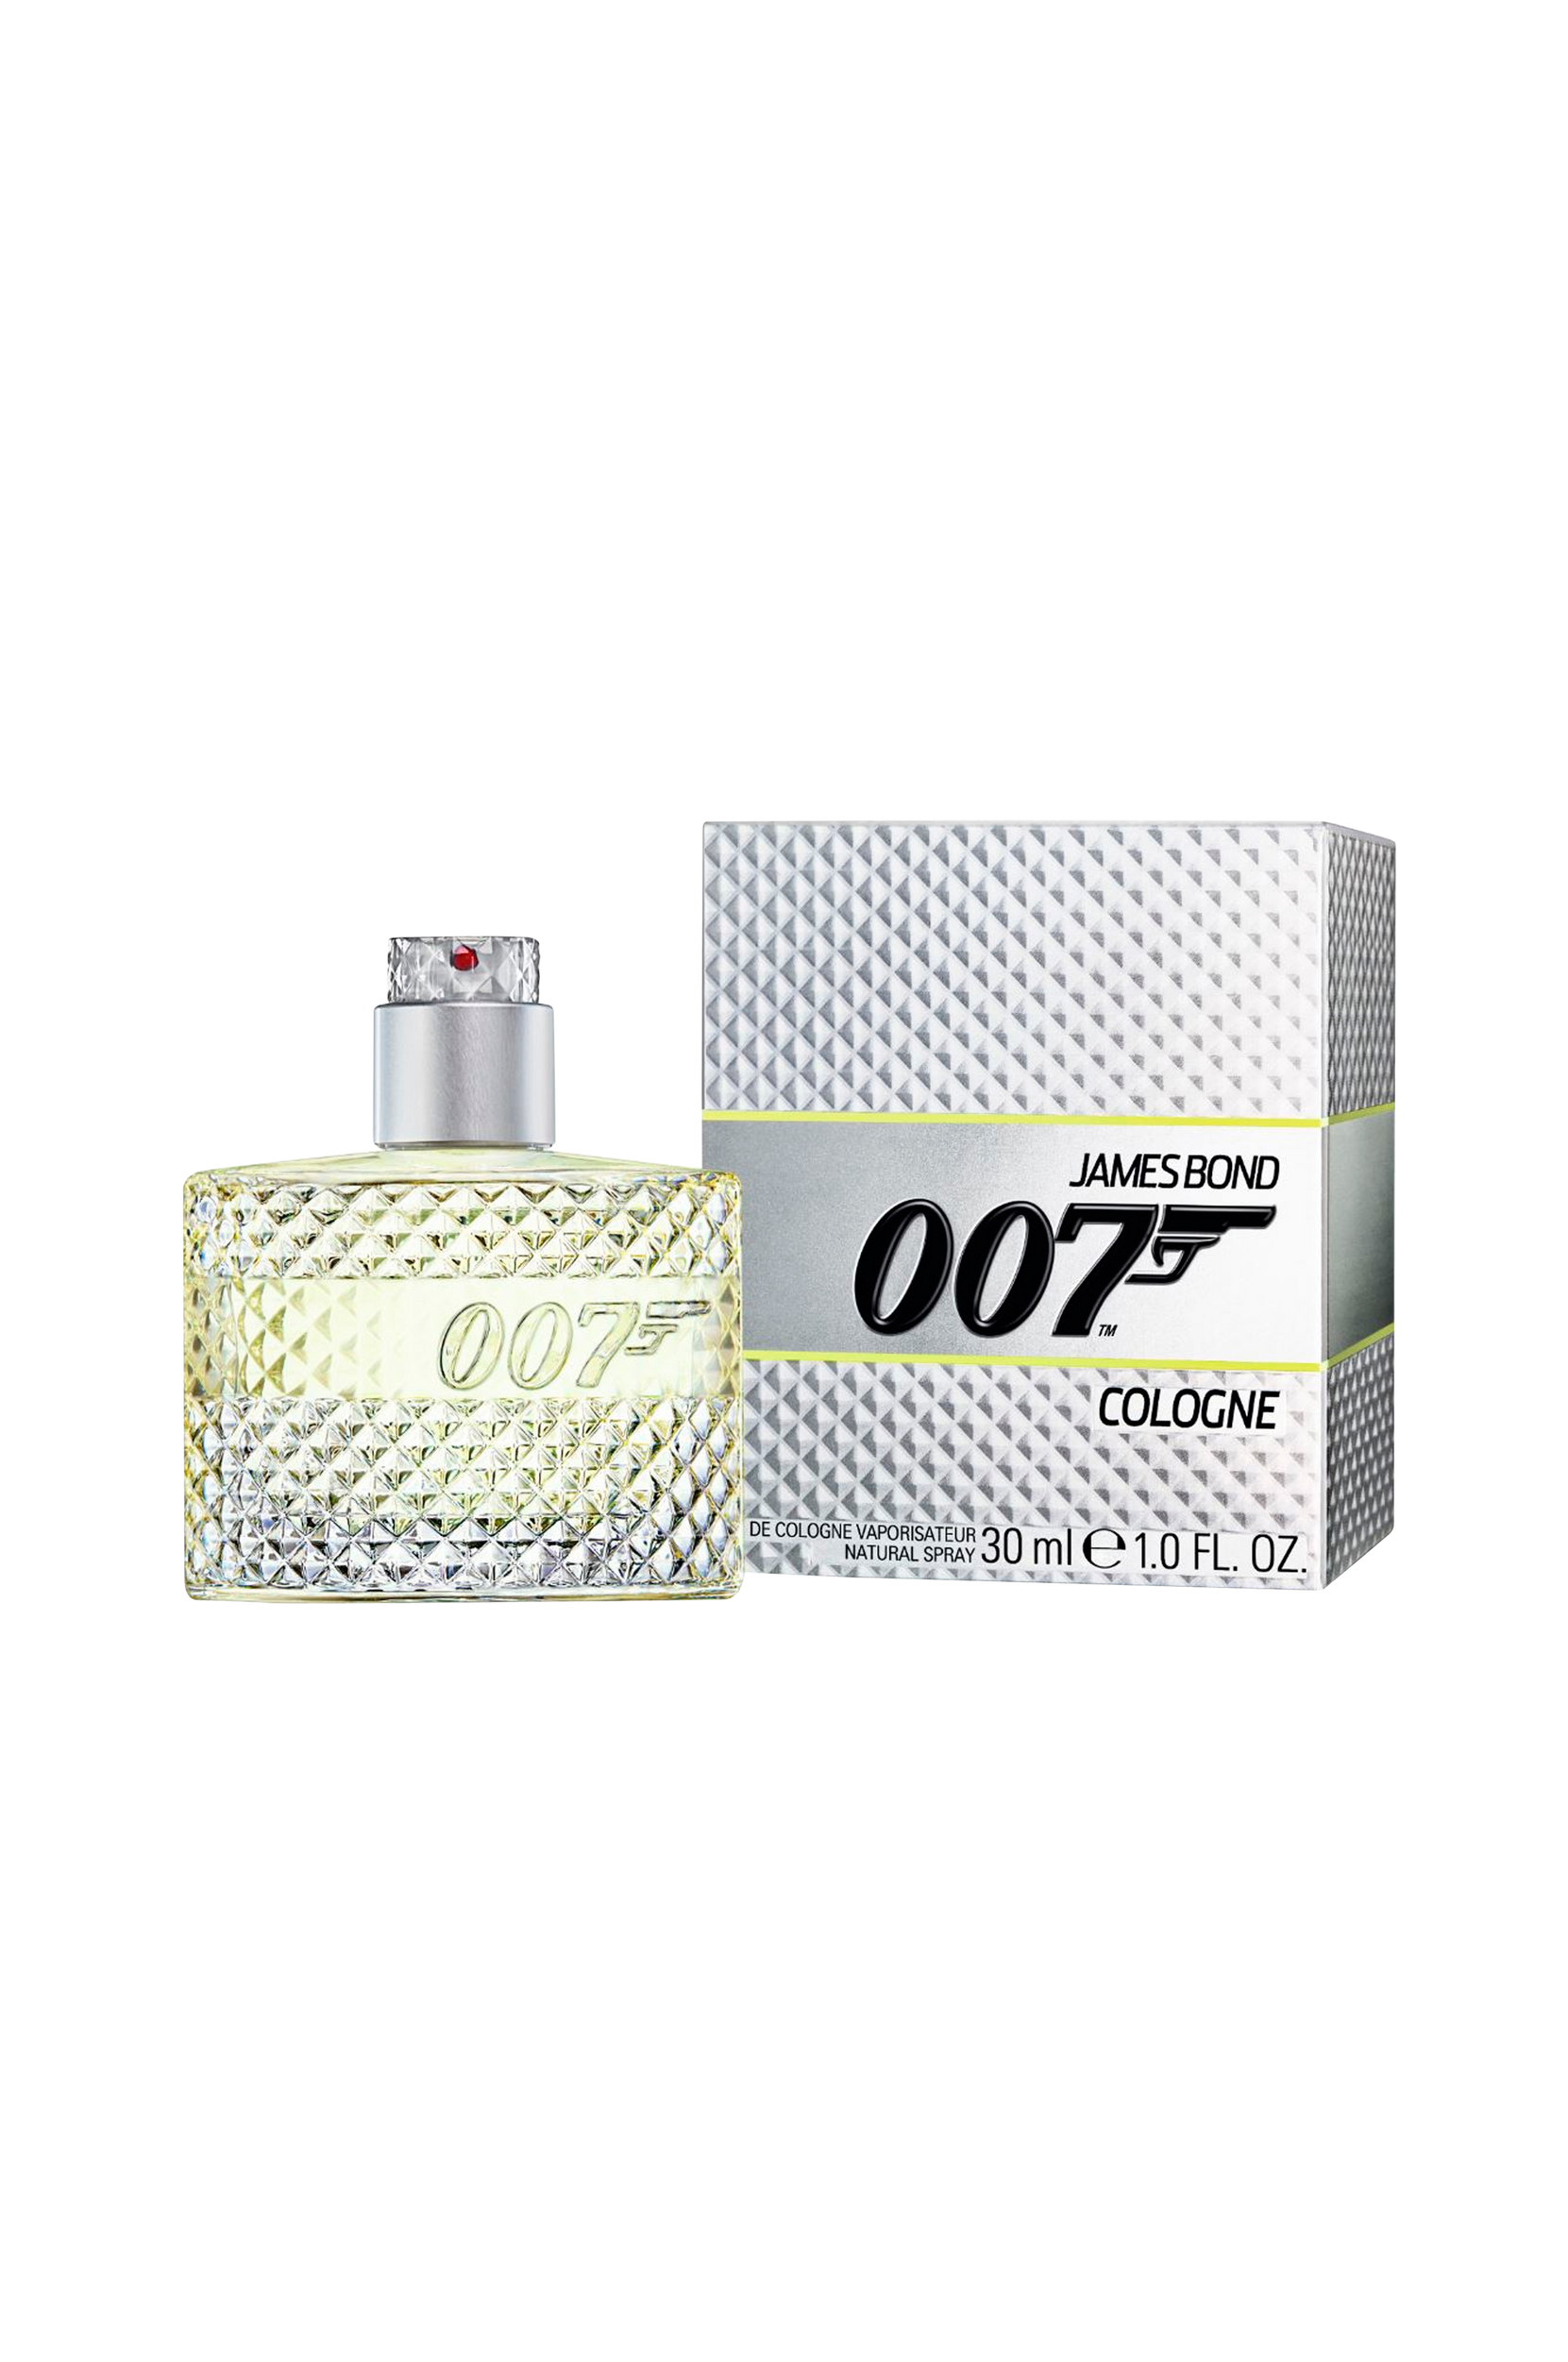 007 Cologne EdC 30 ml, James Bond